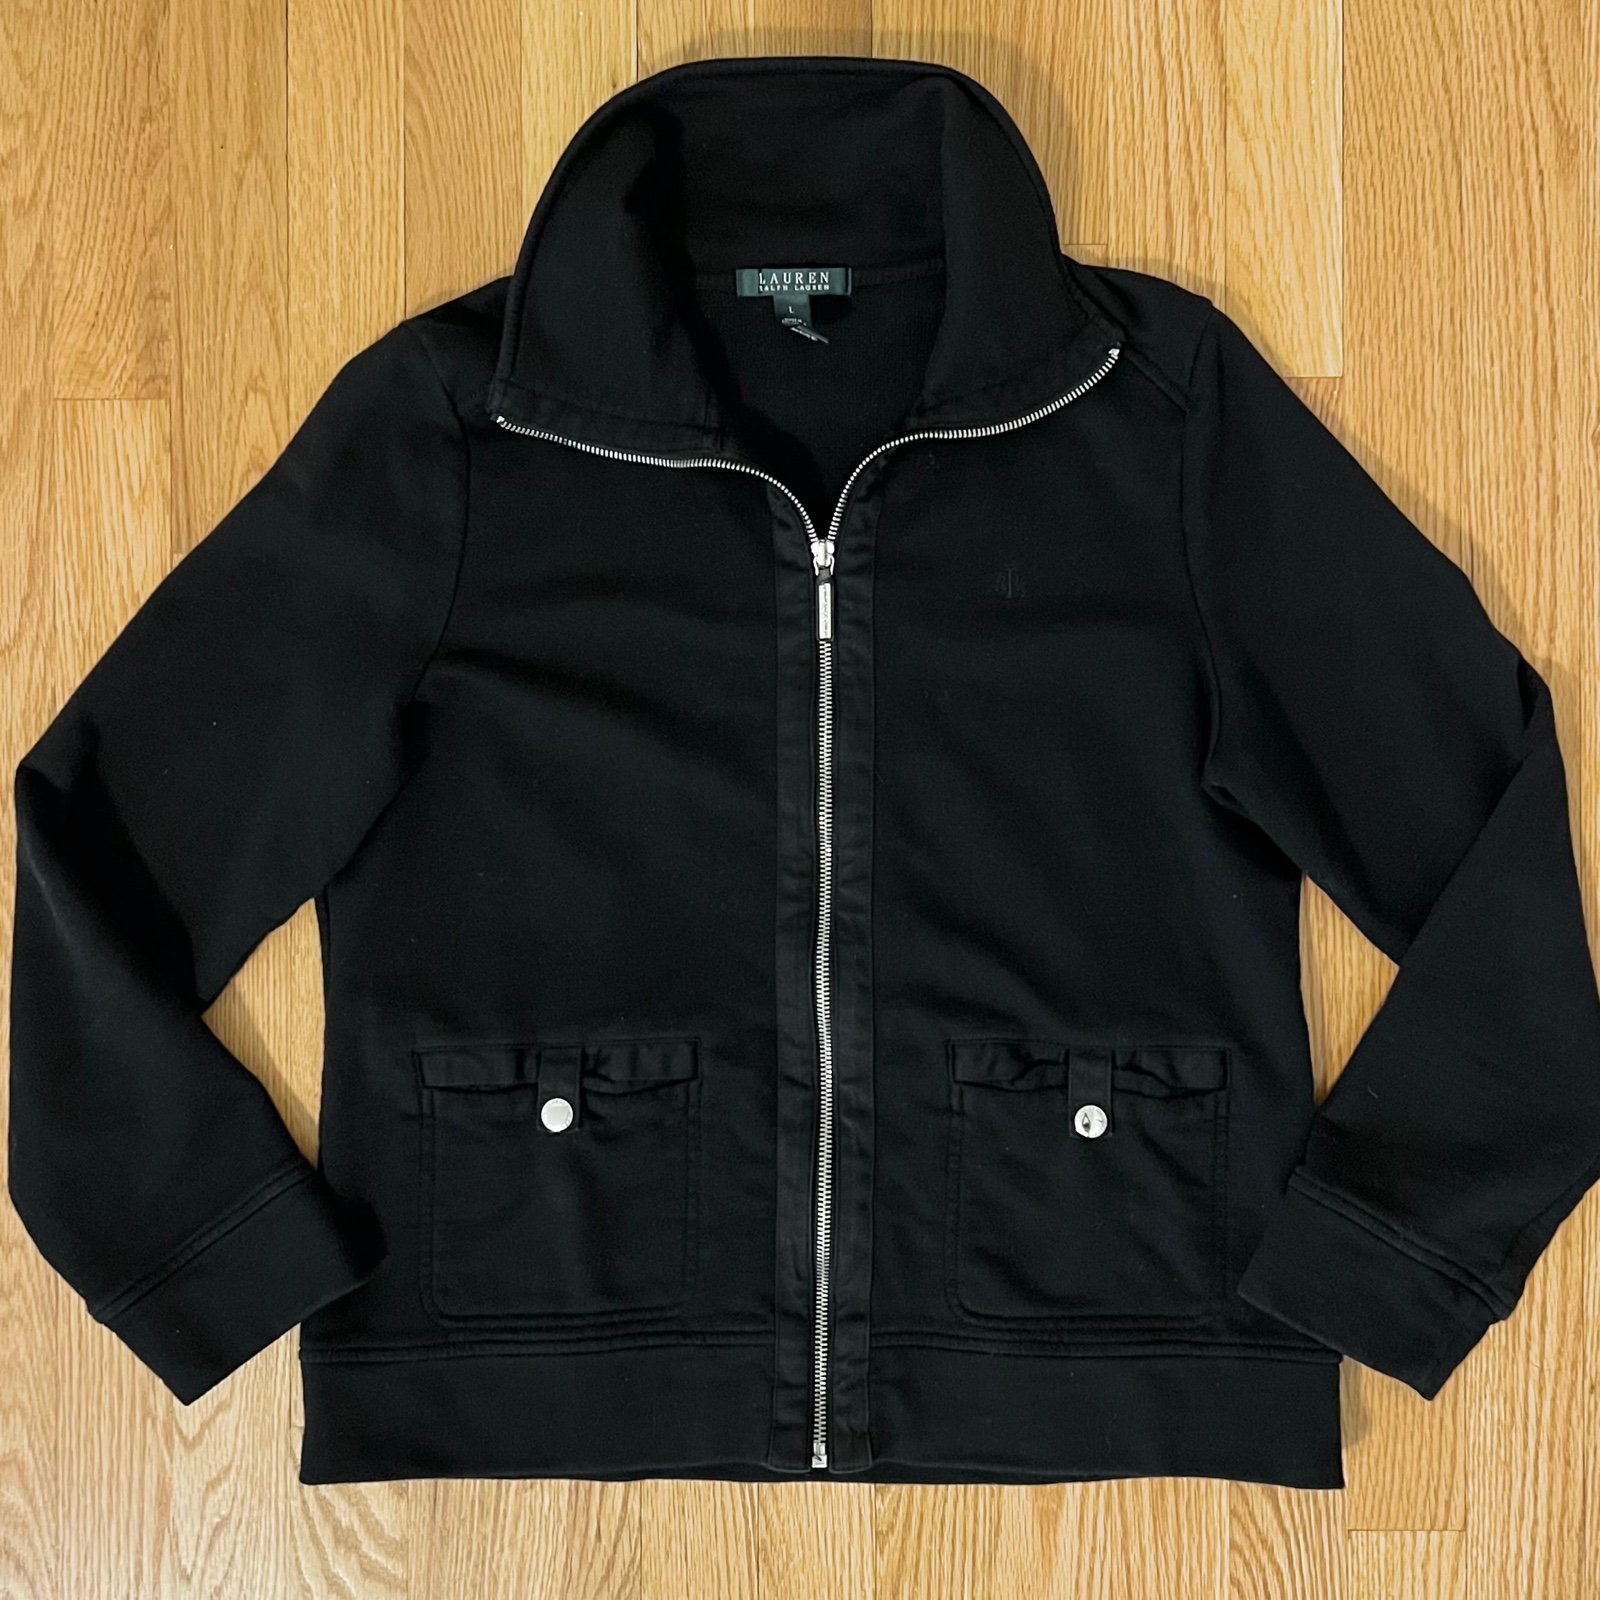 Cheap Ralph Lauren zip up jacket KYNcyas5s on sale